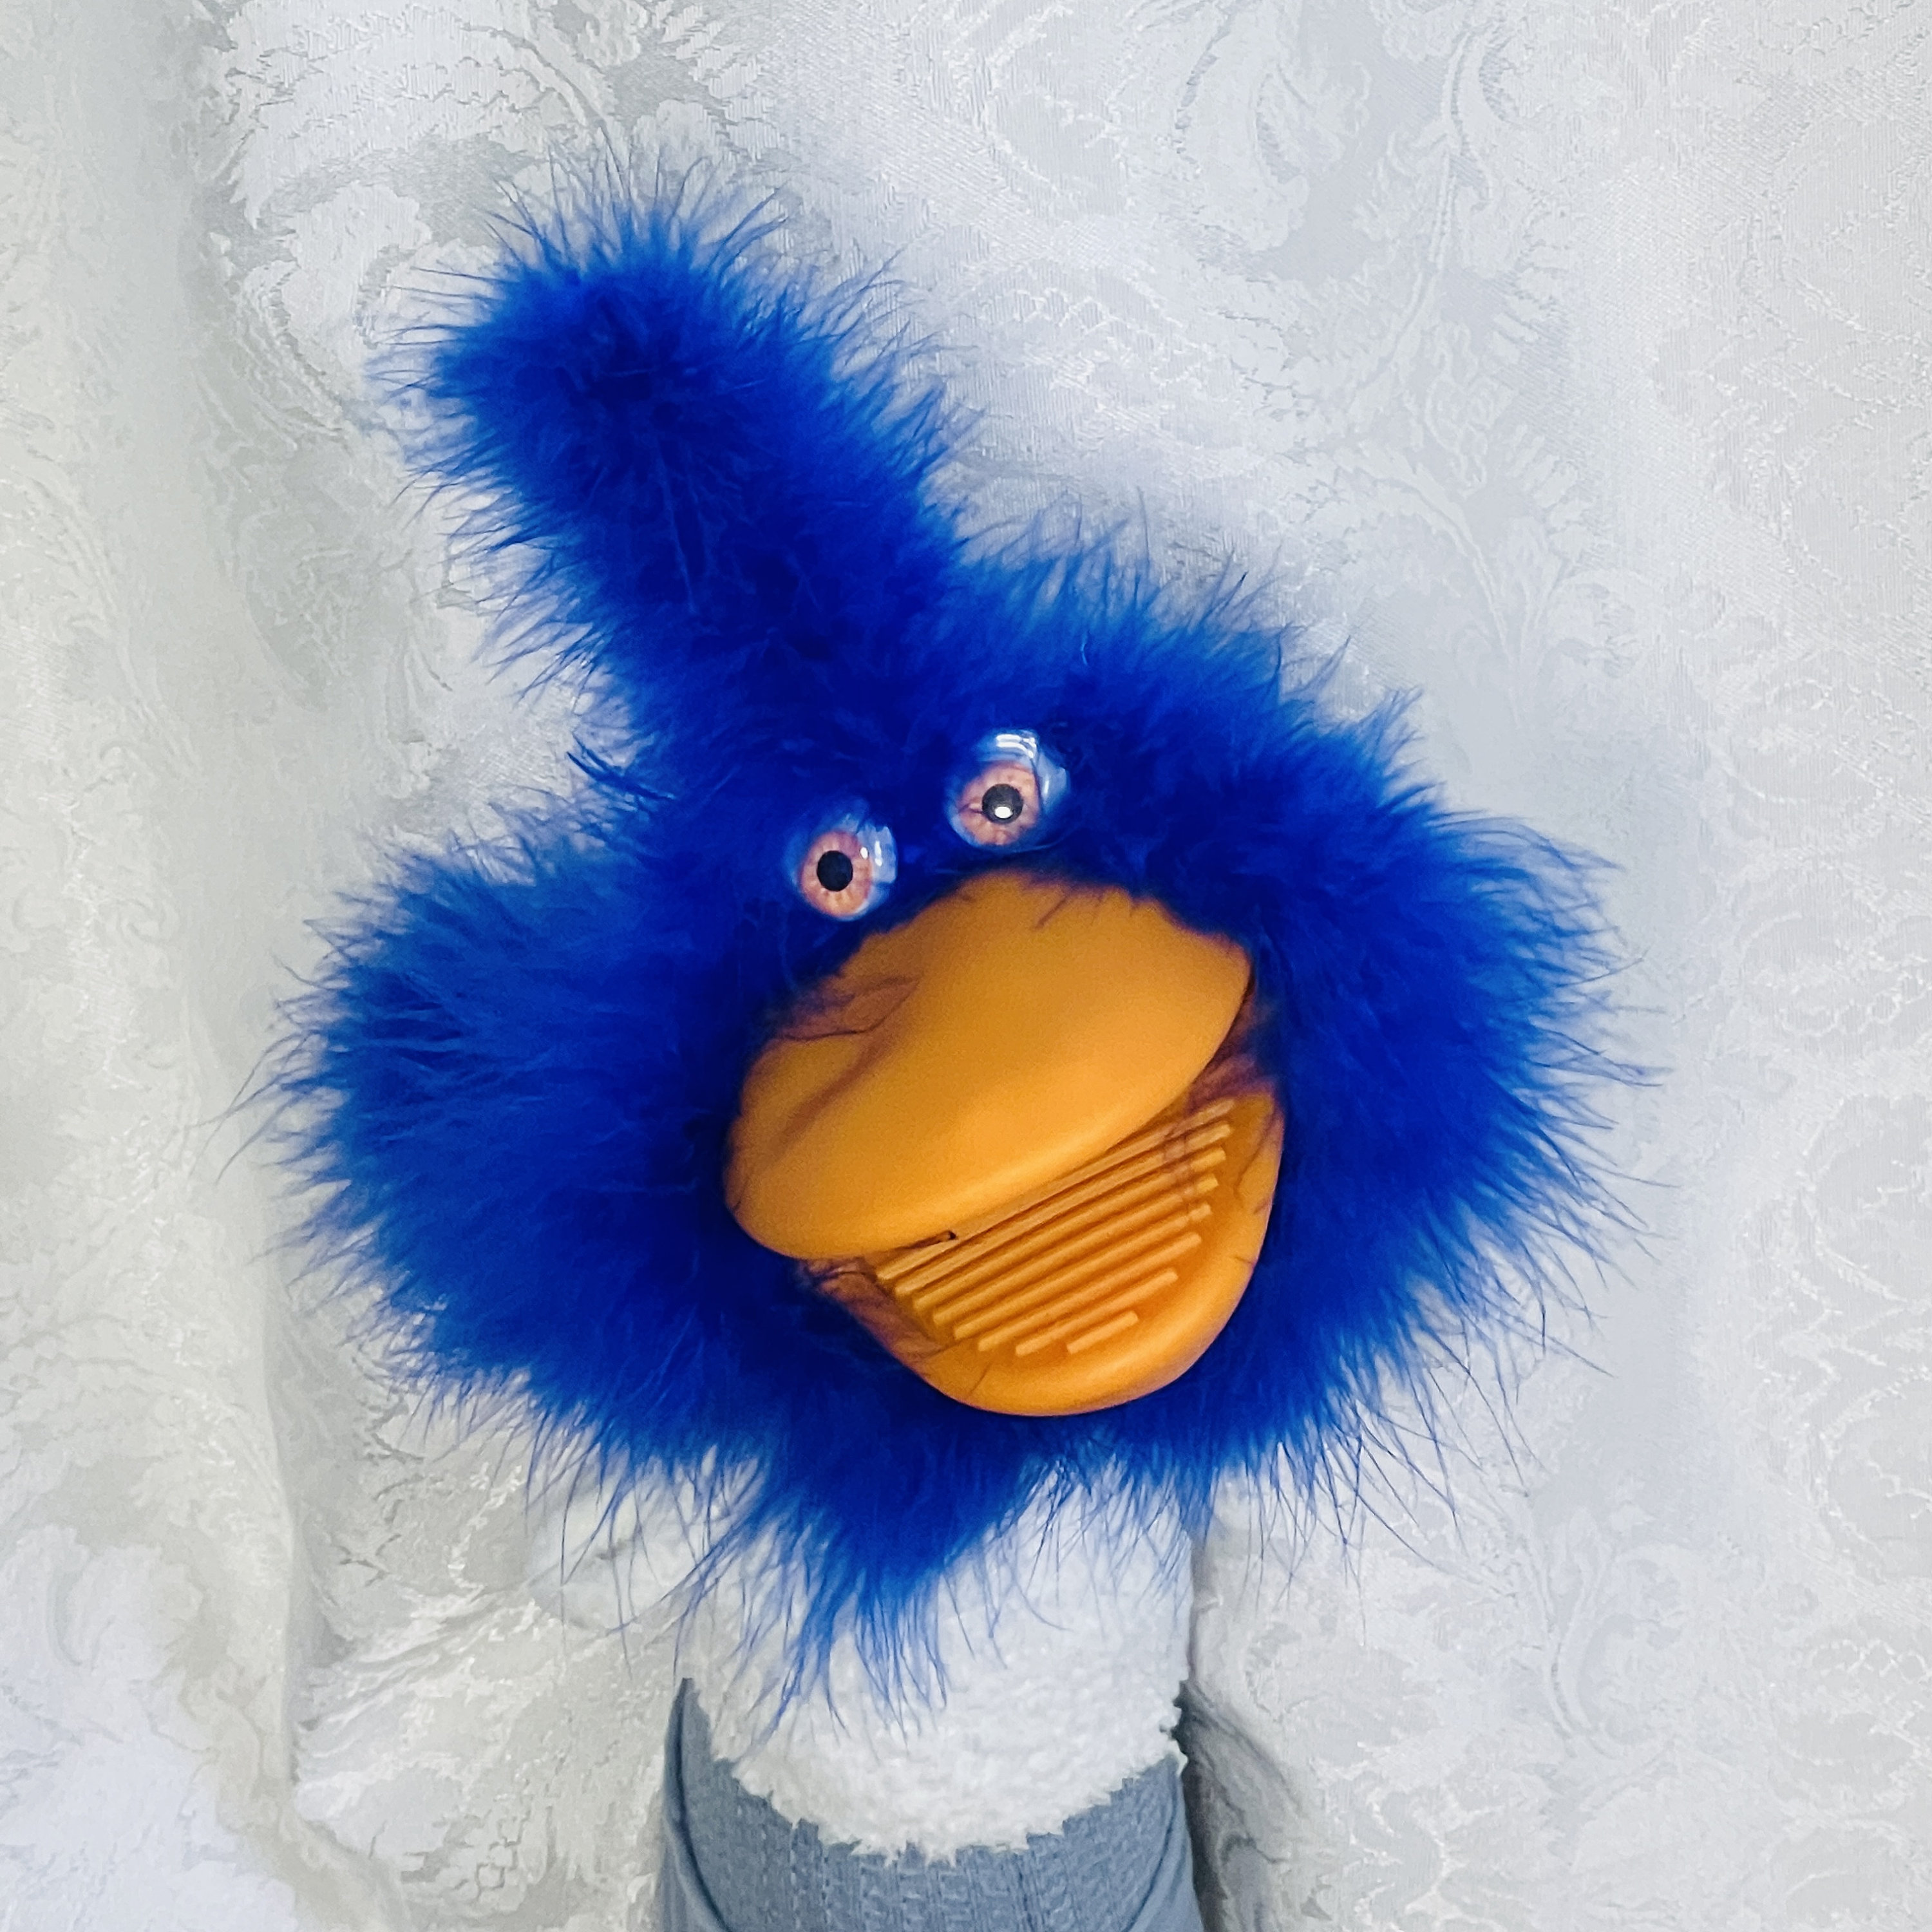 Blue Bird Mouth Puppet Handmade Toy Expressive